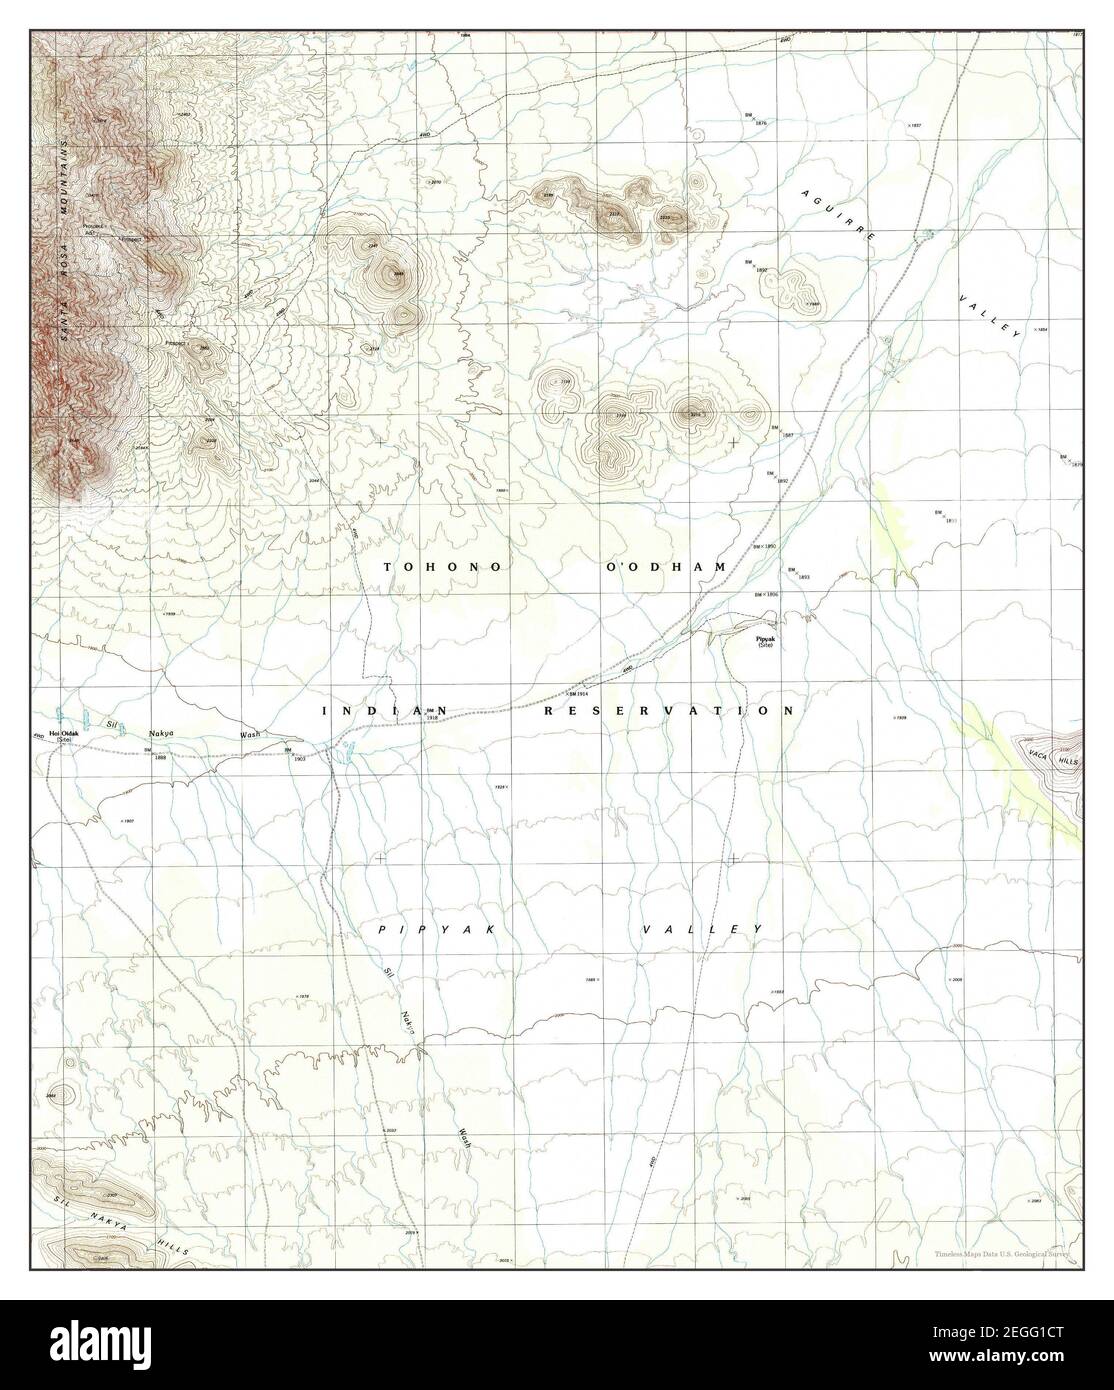 Santa Rosa Mountains SE, Arizona, map 1996, 1:24000, United States of America by Timeless Maps, data U.S. Geological Survey Stock Photo